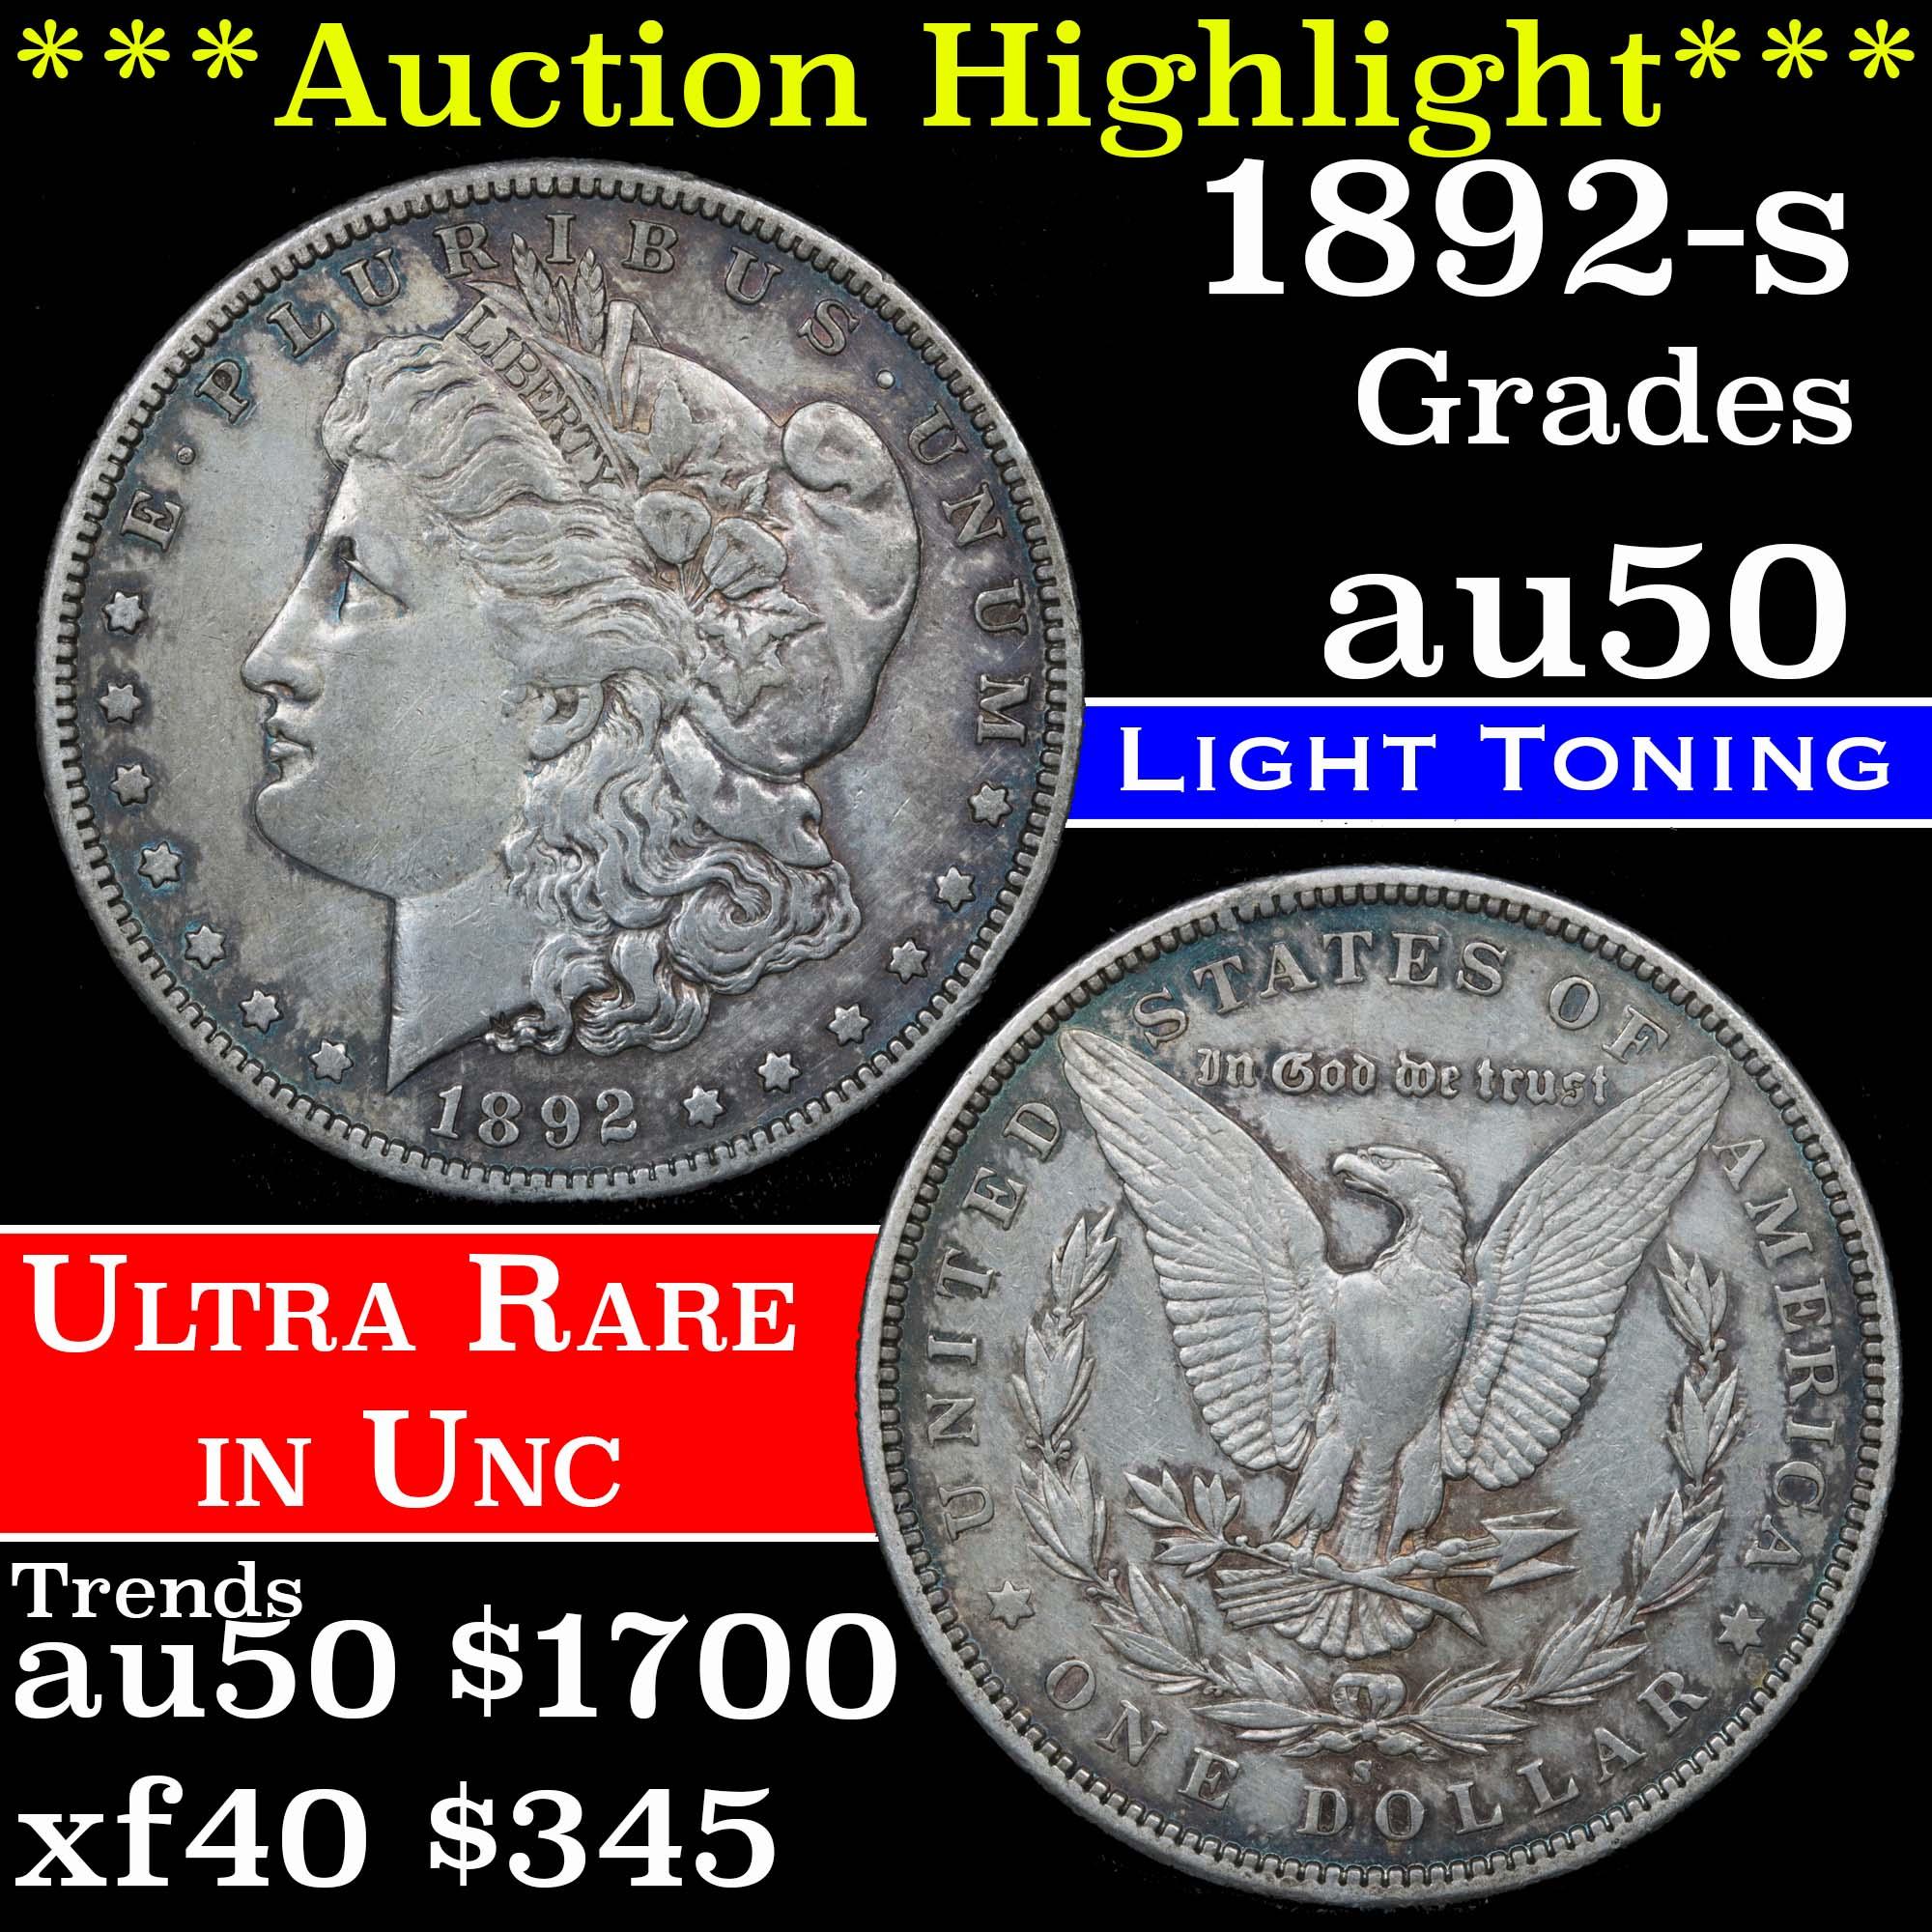 ***Auction Highlight*** 1892-s Morgan Dollar $1 Grades AU, Almost Unc (fc)